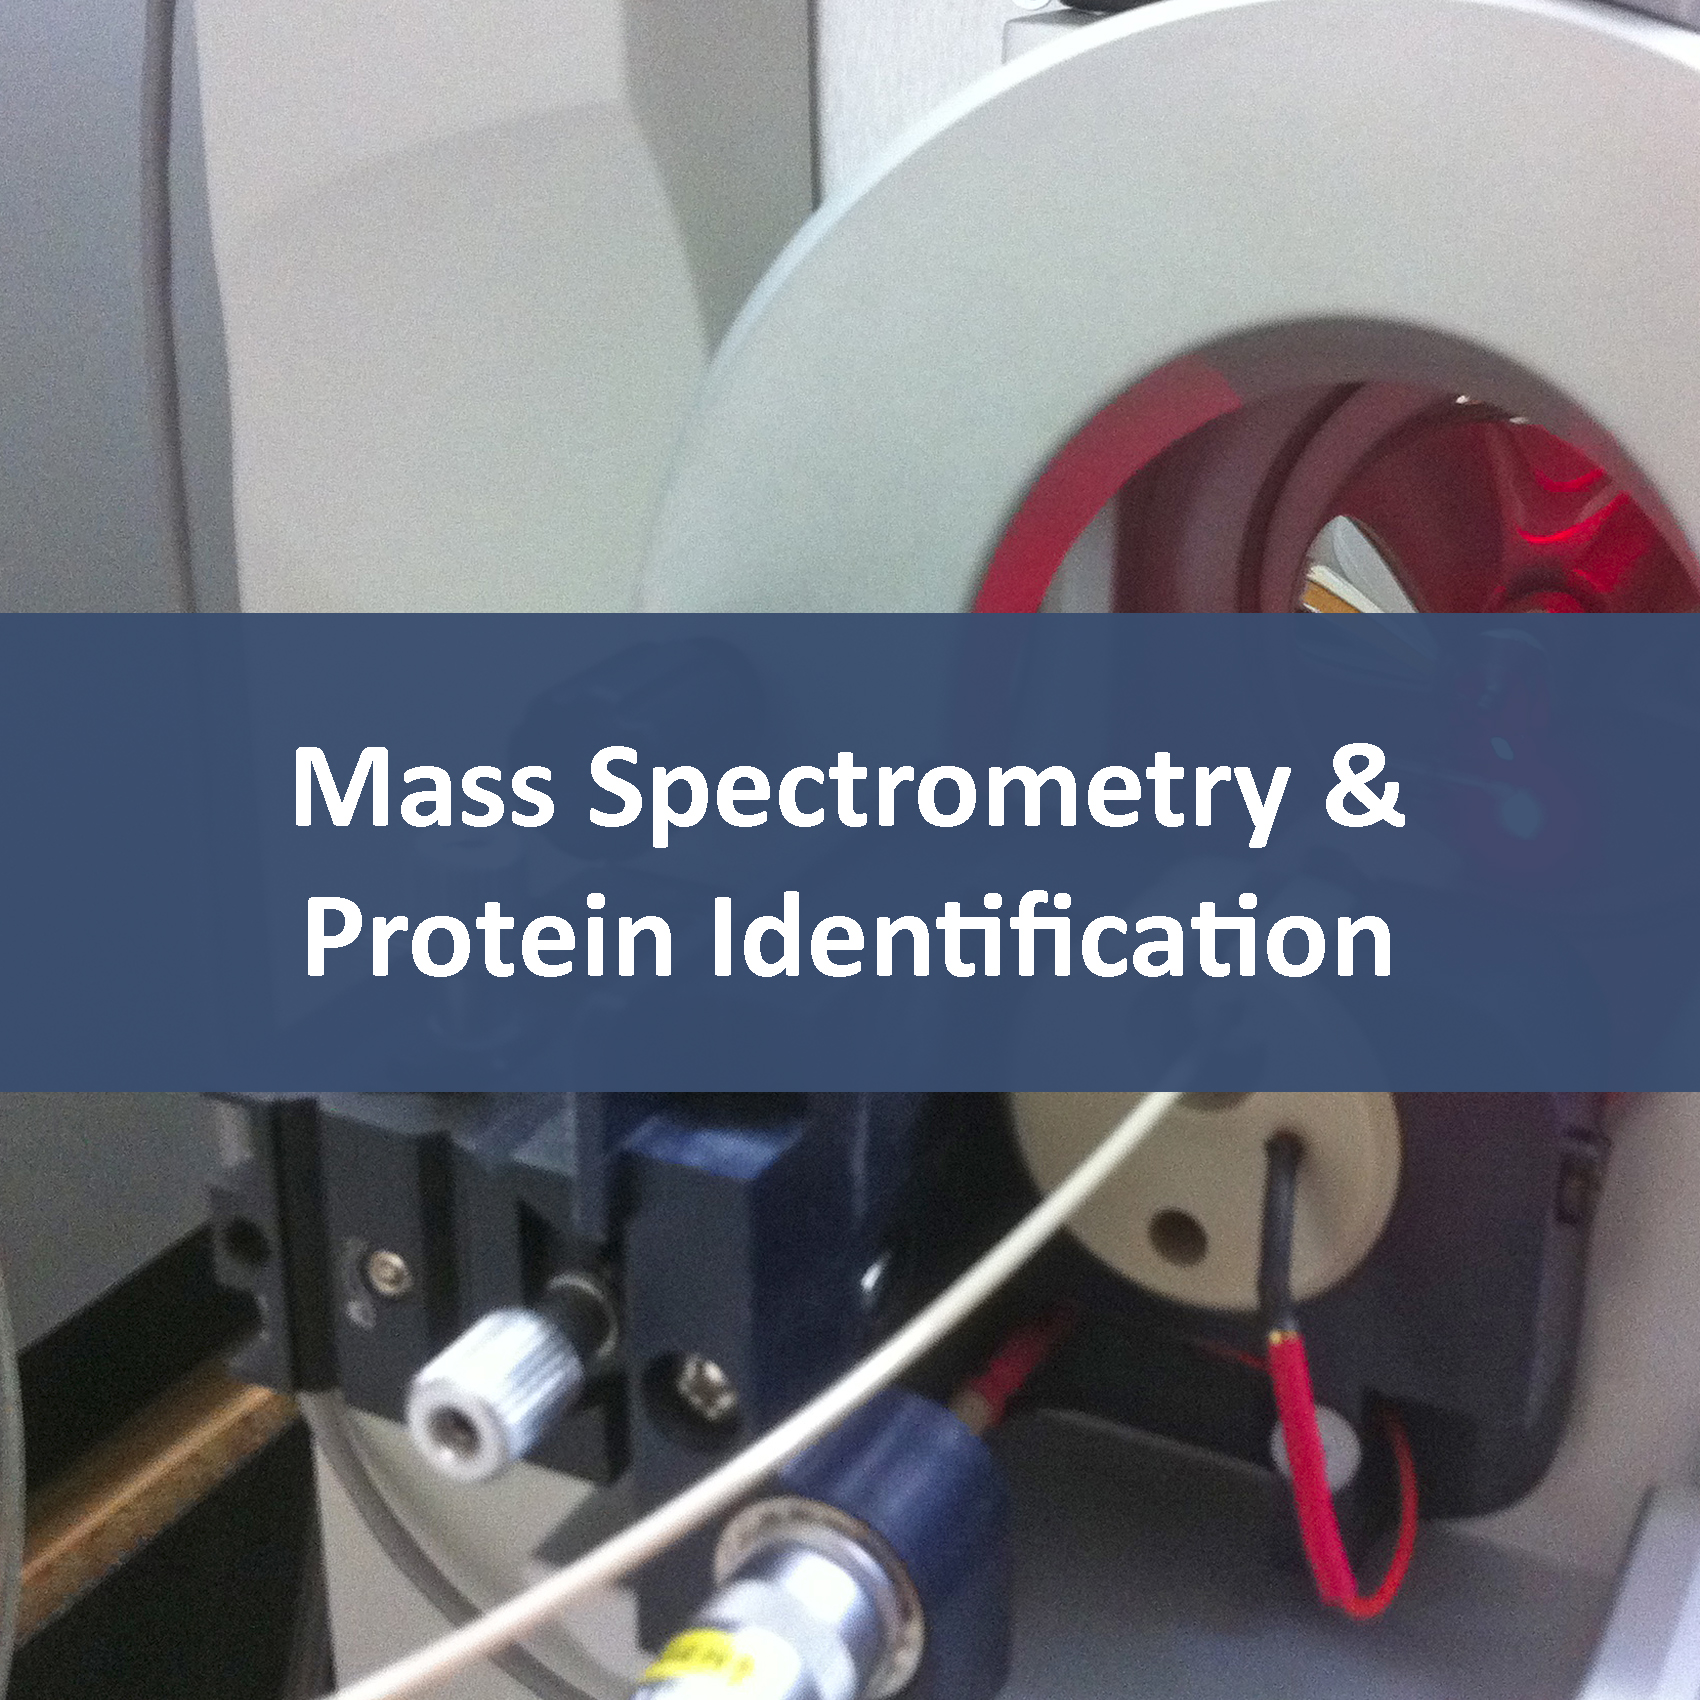 Mass Spectrometry & Protein Identification